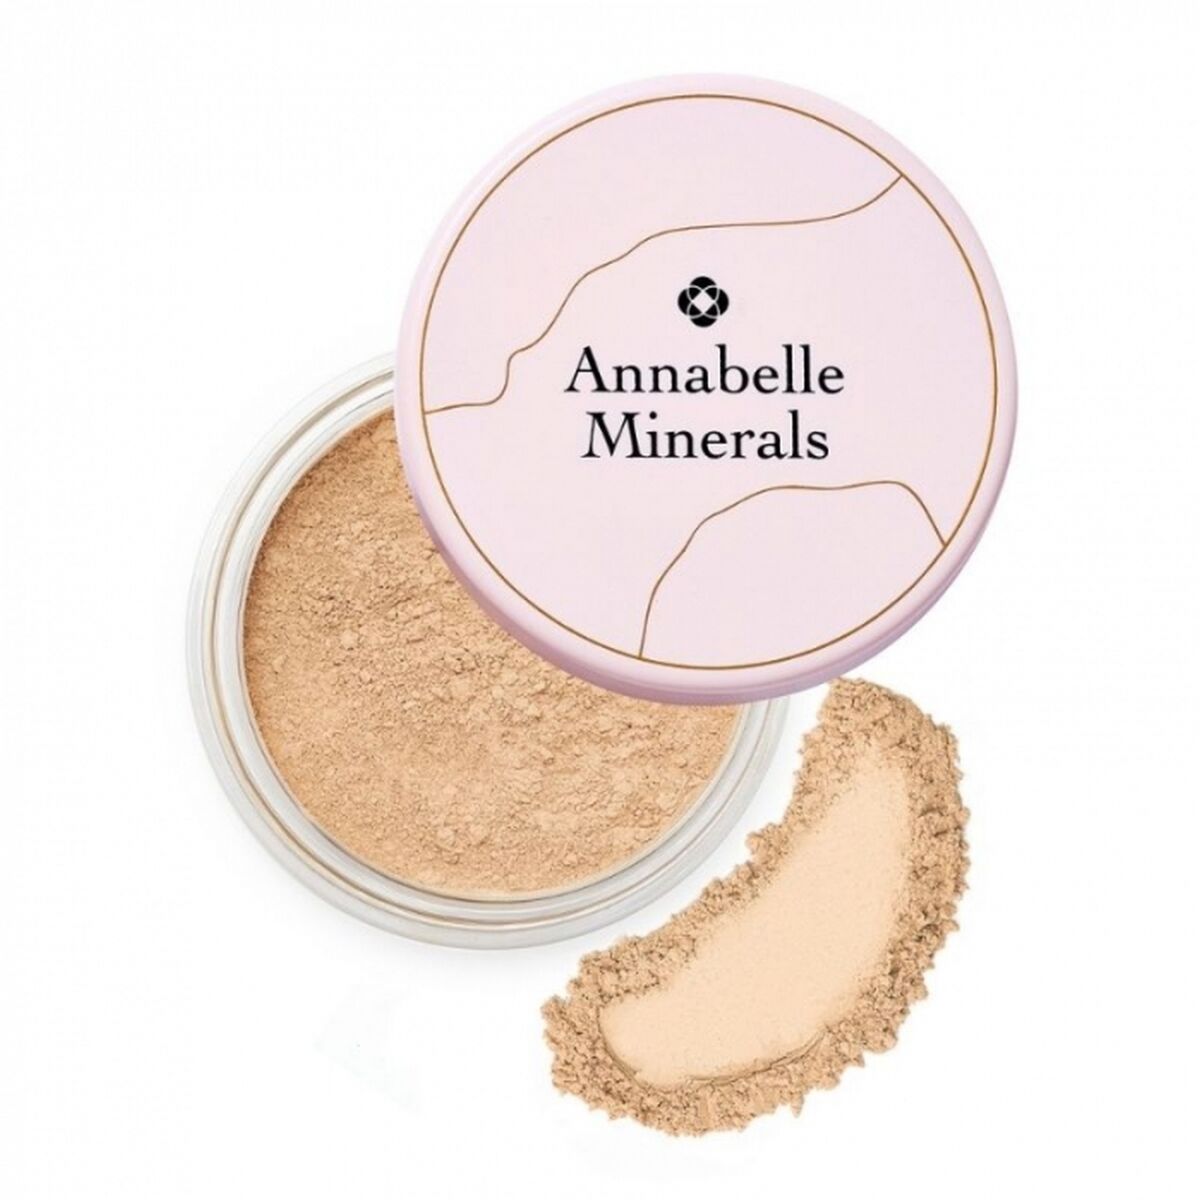 Annabelle Minerals Podkład mineralny - rozświetlający Golden Sand - 4g